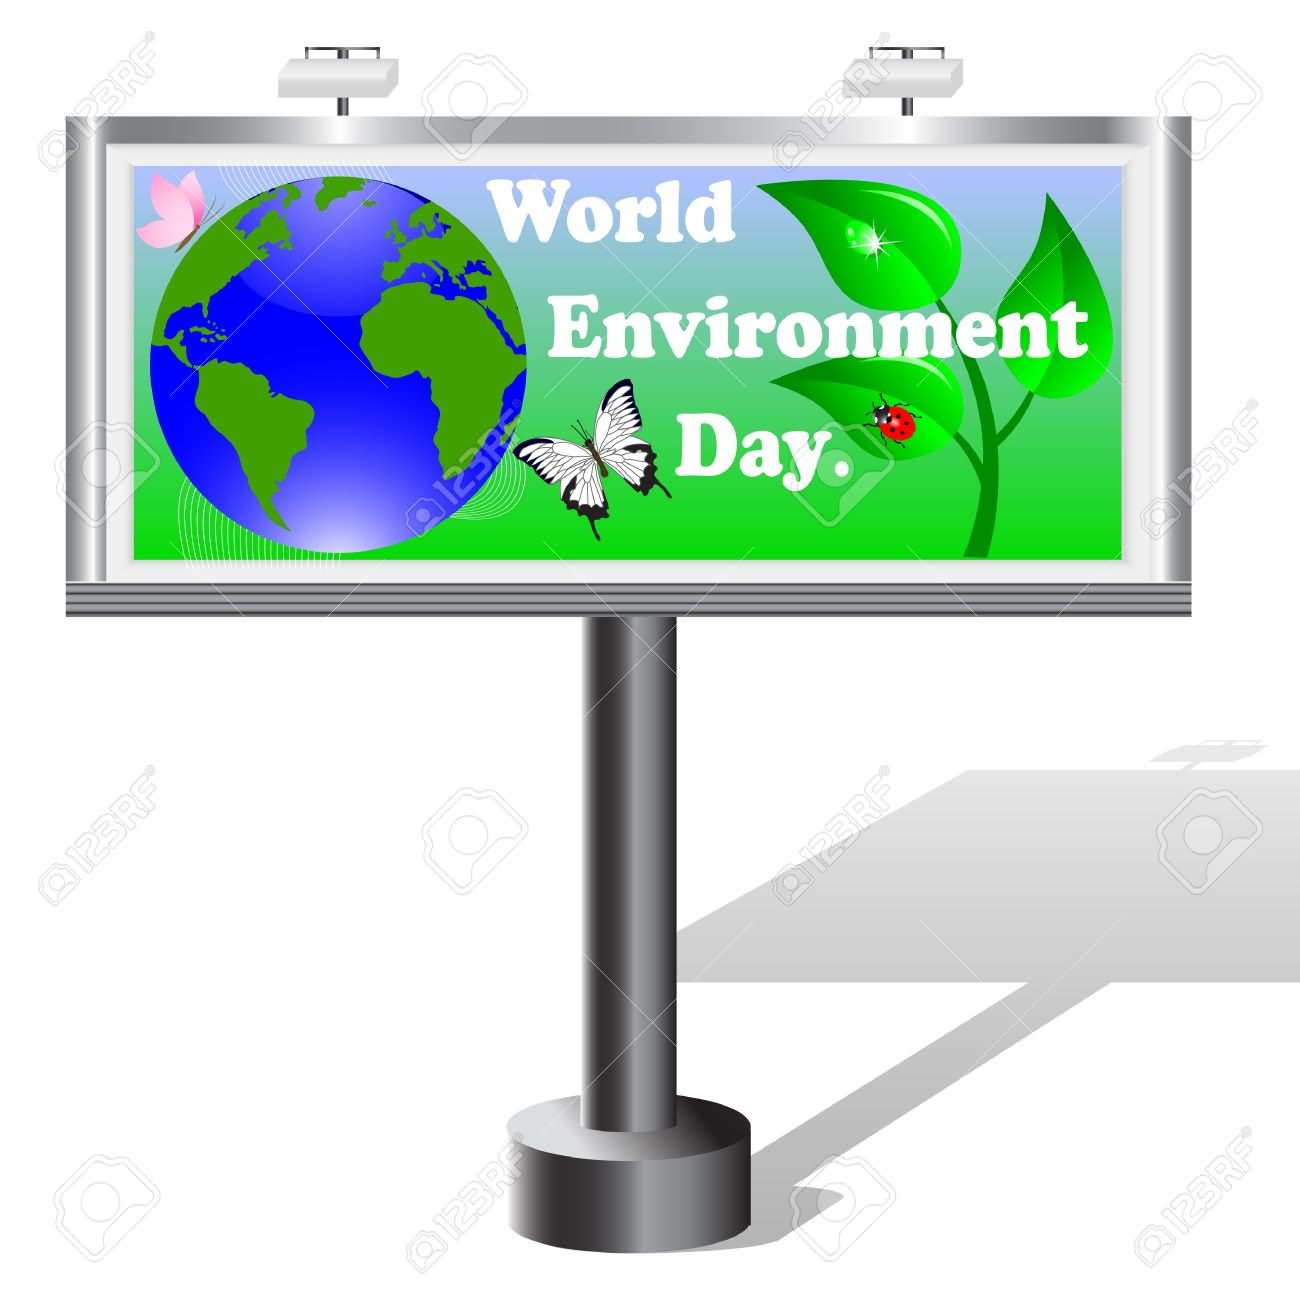 World Environment Day Signboard